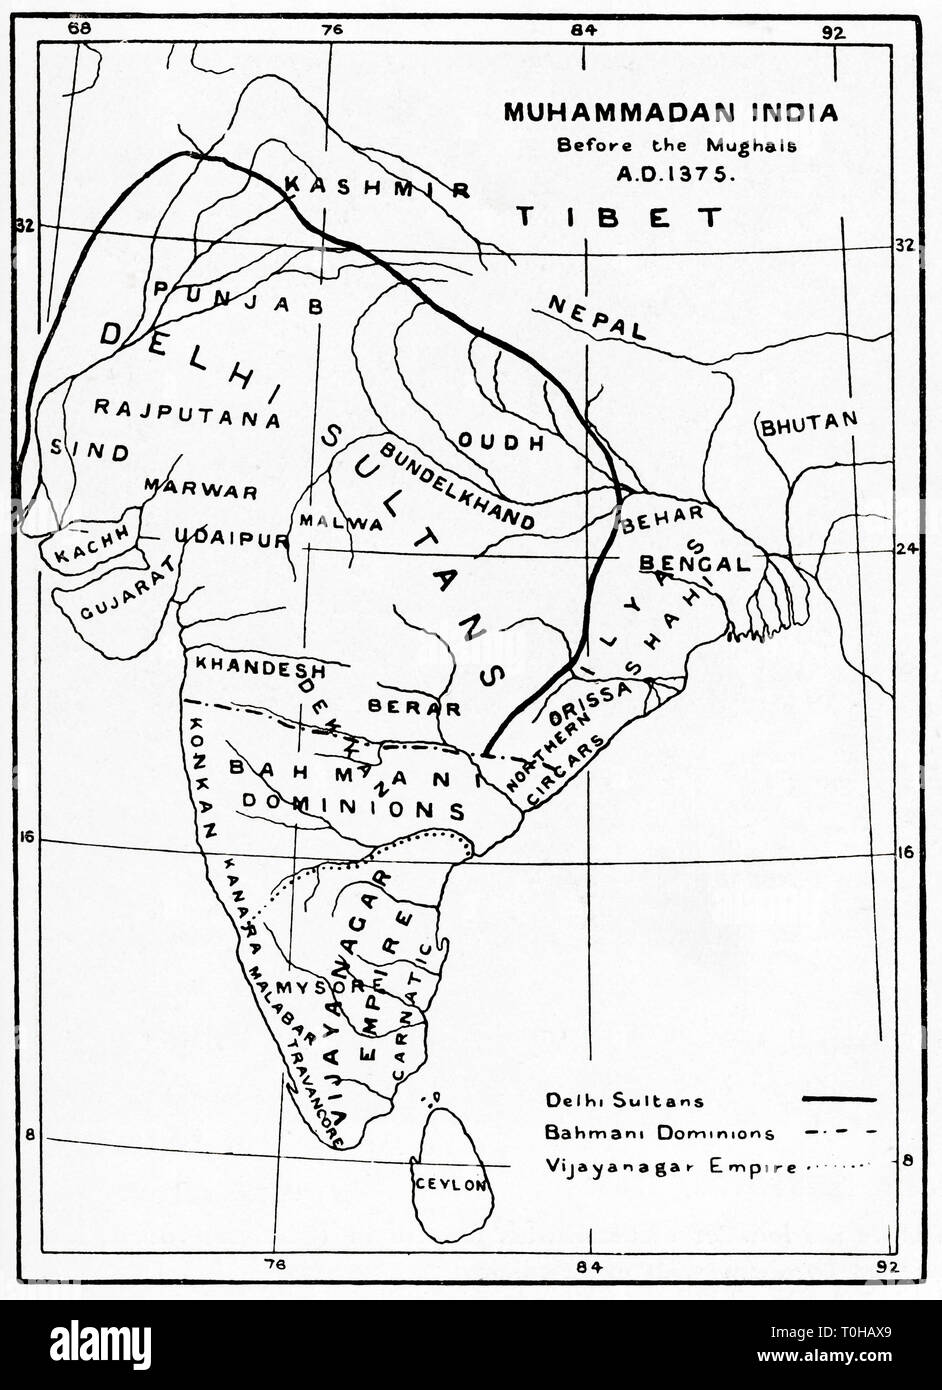 Carte de l'Inde moghole Muhammadan avant circa, 1375 Banque D'Images